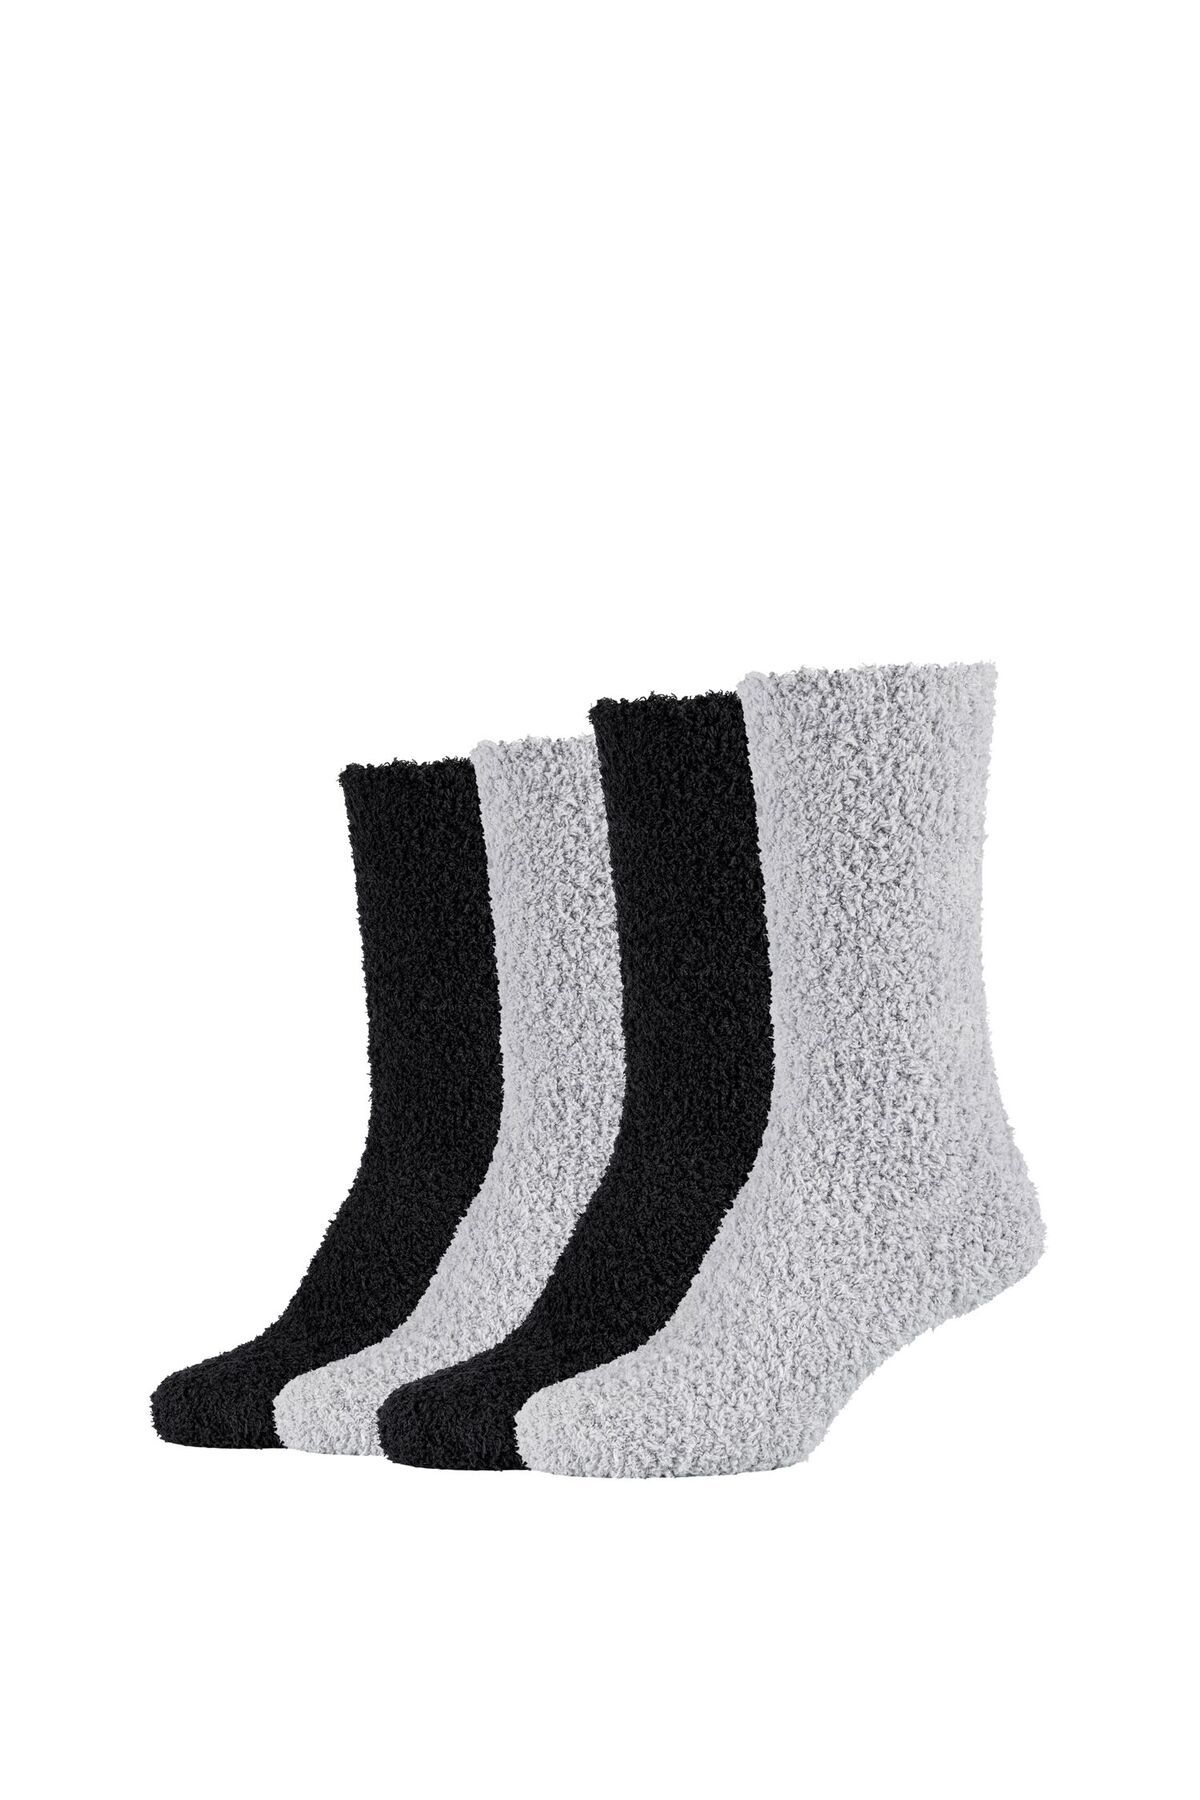 camano Socks - Plain - Black - Trendyol